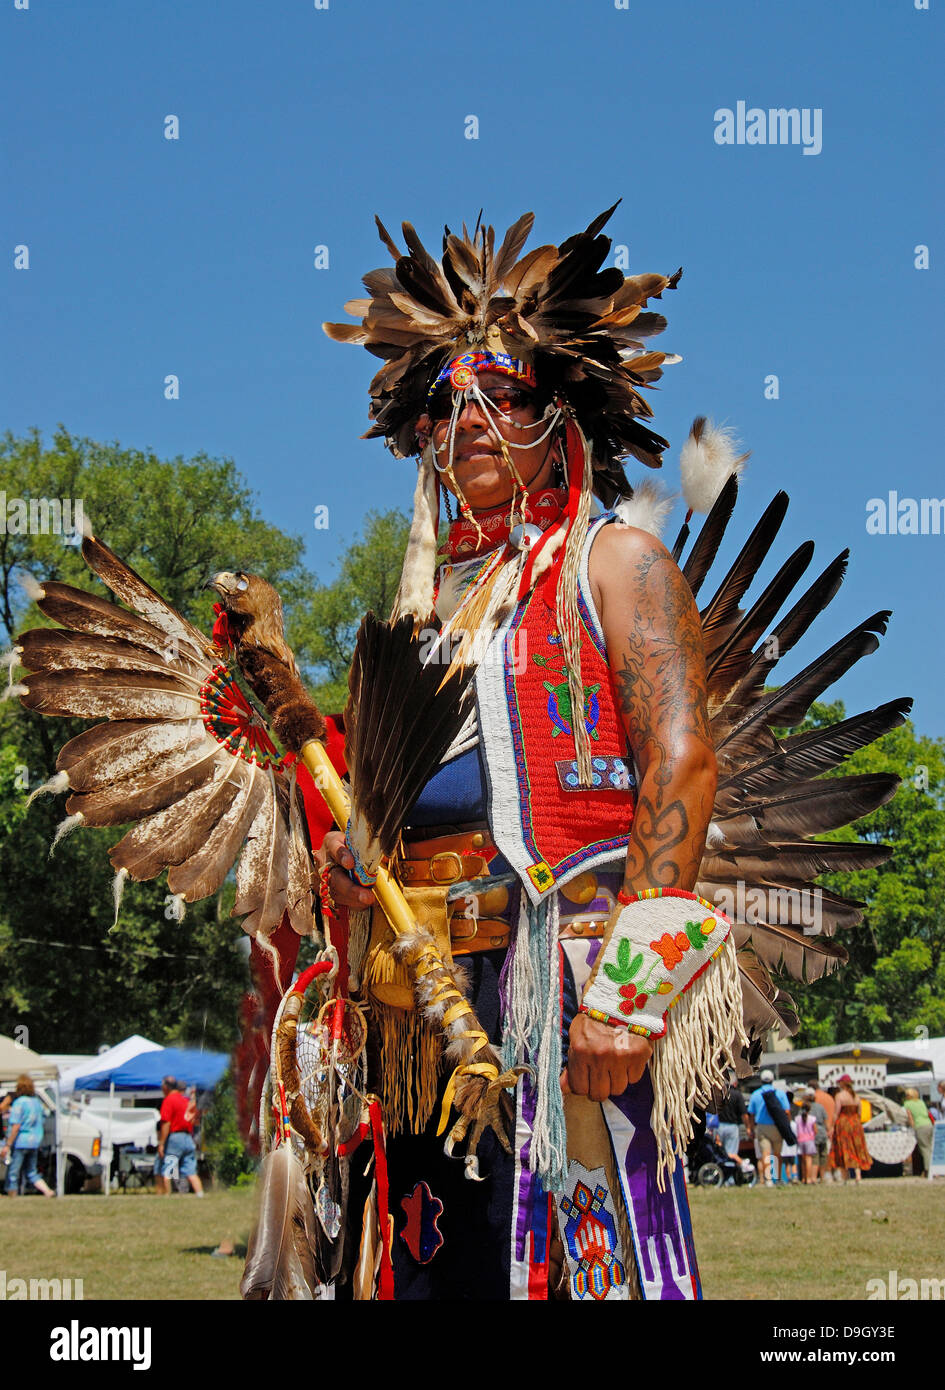 Native American man célèbre Pow-wow en Ontario, Canada Banque D'Images